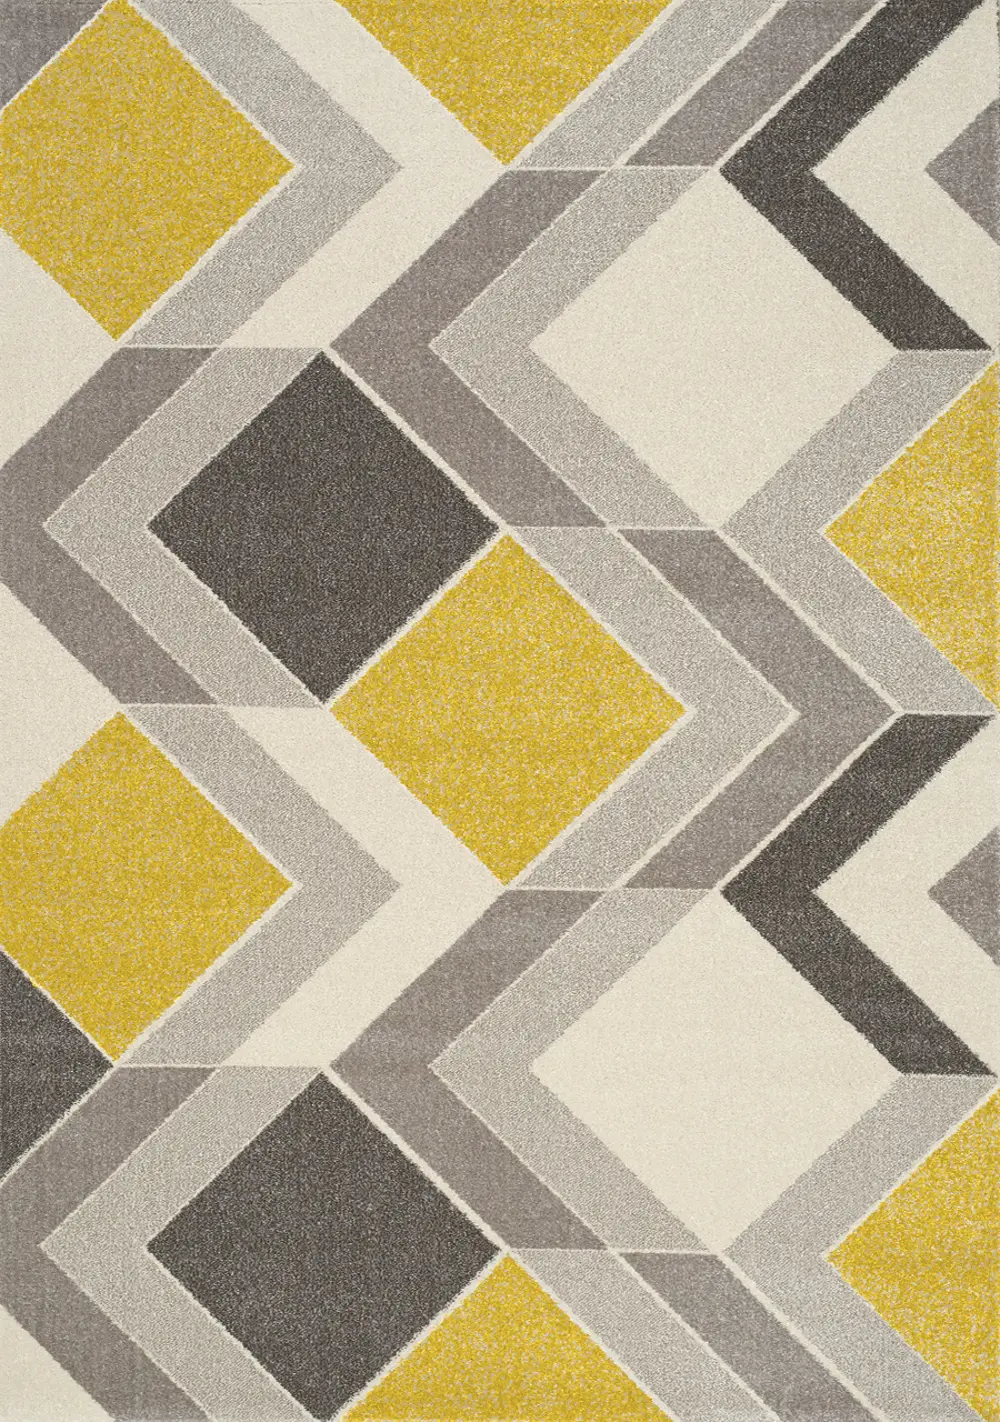 8 x 11 Large Geometric Gray, Cream and Yellow Area Rug - Safi-1